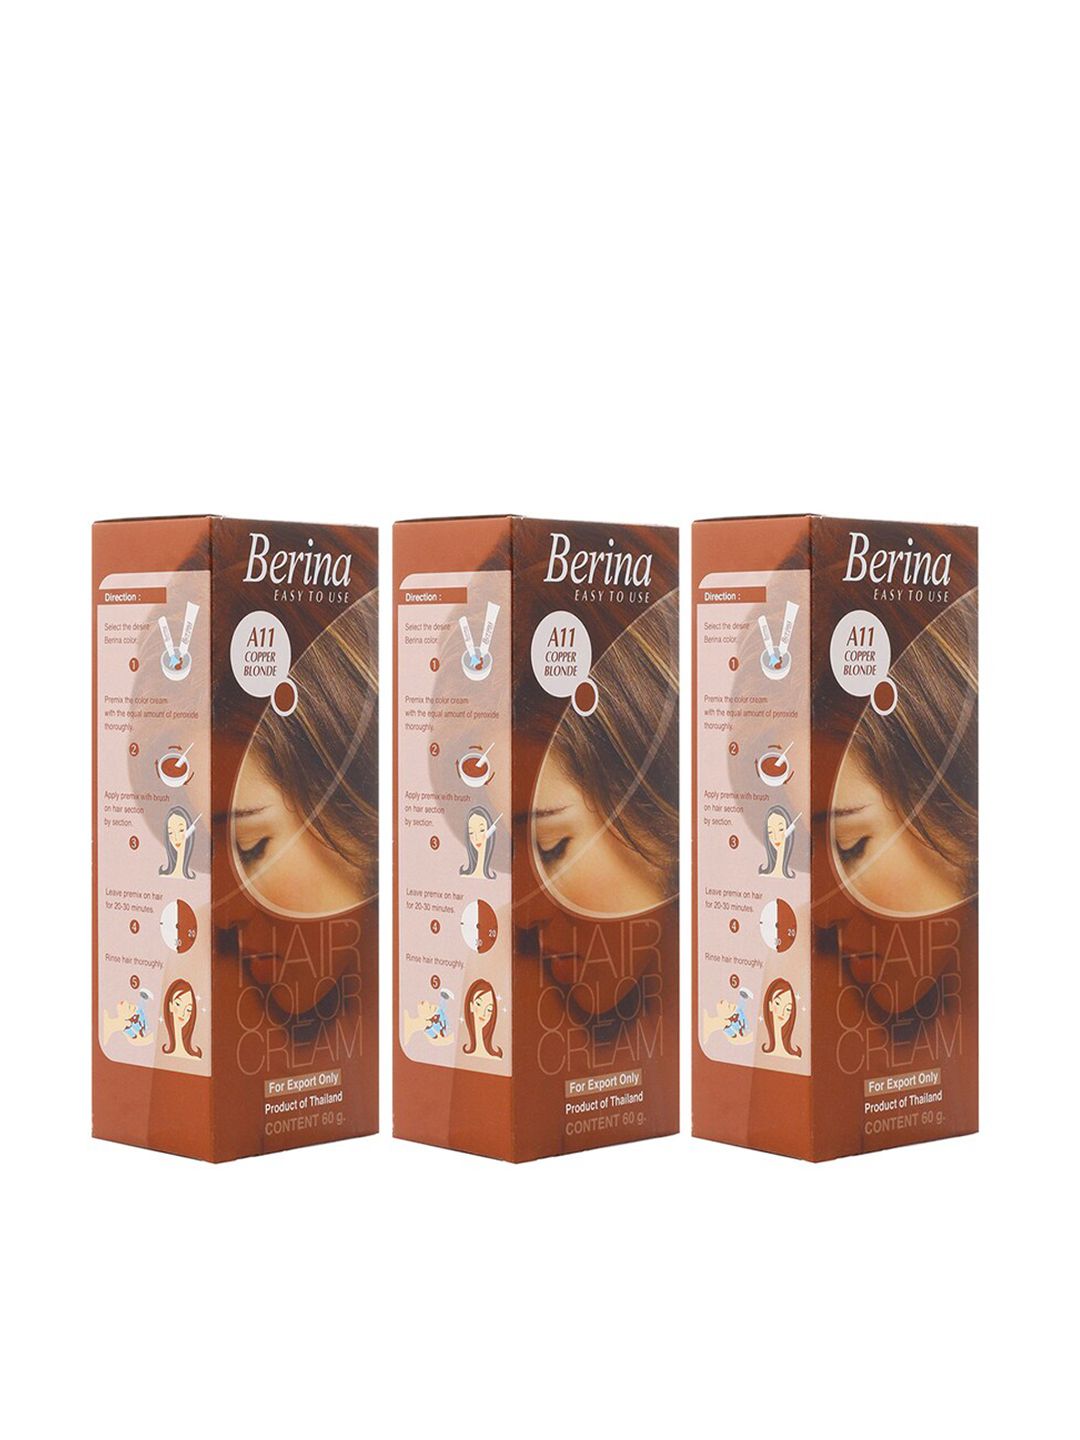 Berina Pack of 3 A11 Copper Blonde Hair Color Cream - 60gm Each Price in India